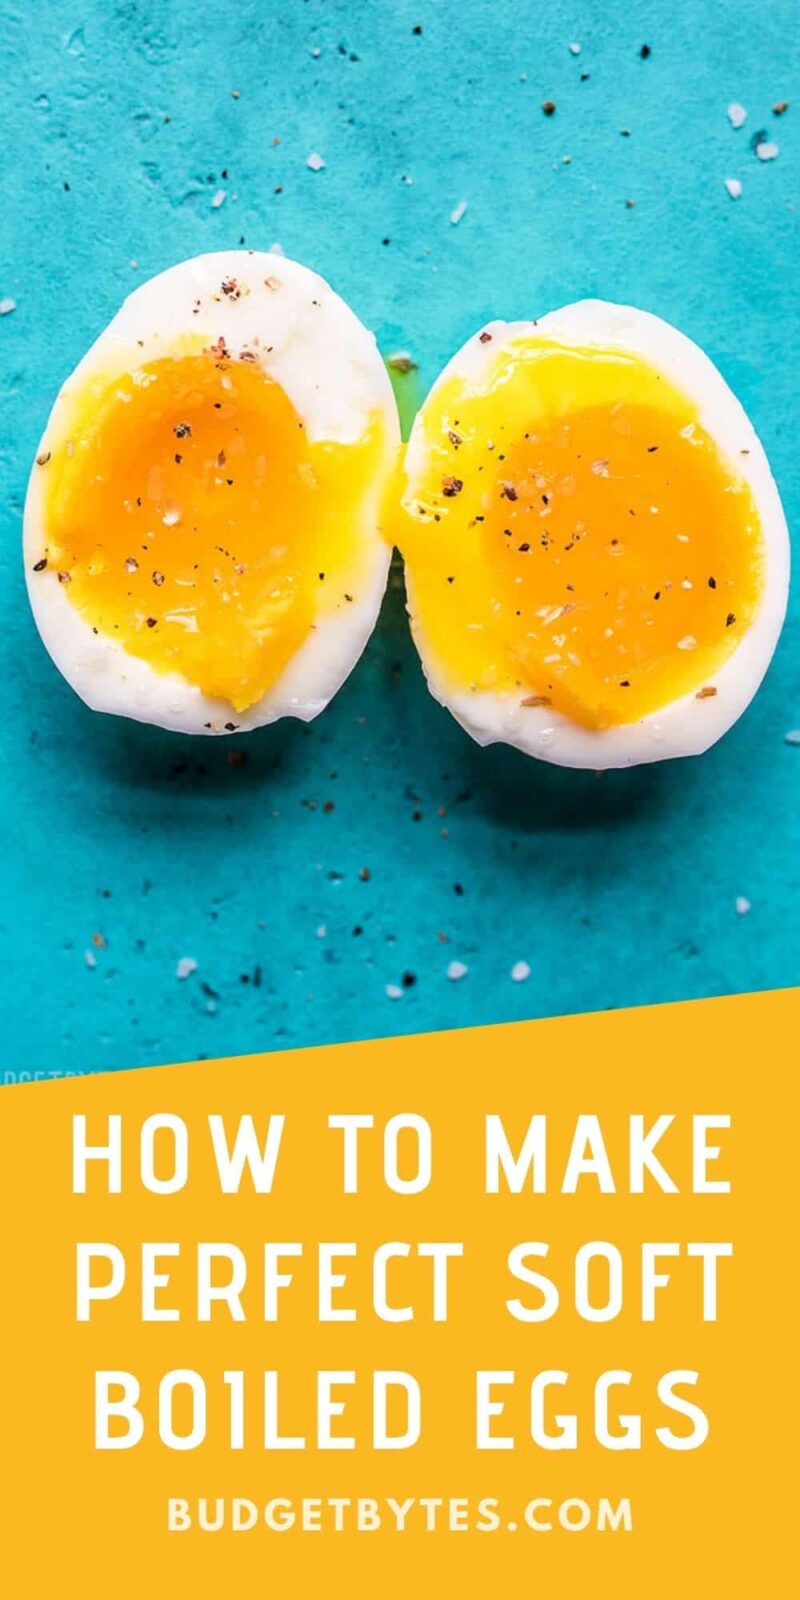 How To Make Soft Boiled Eggs Budget Bytes